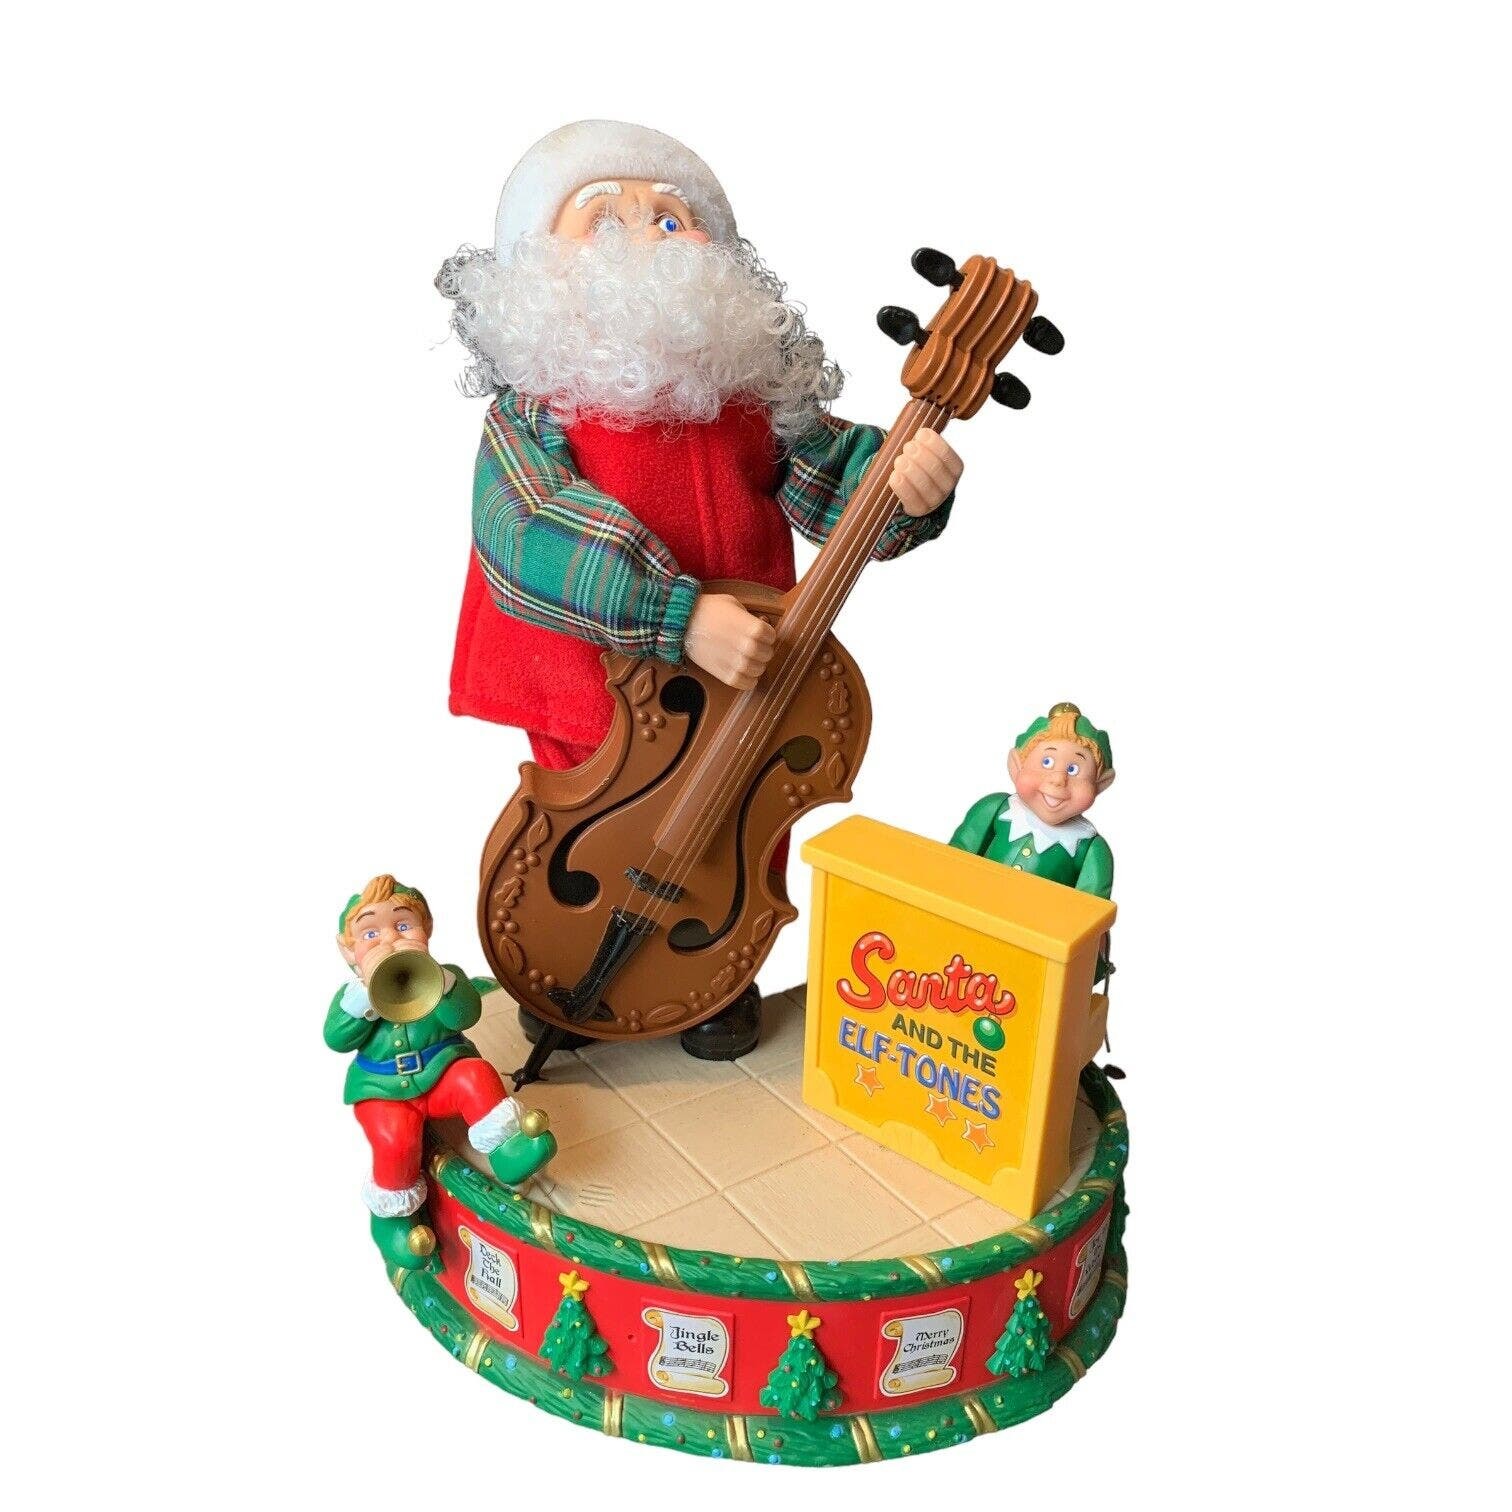 Primary image for 2001 Avon Singing Santa Elf Takes Request, Santa, Avon Interactive Singing Santa